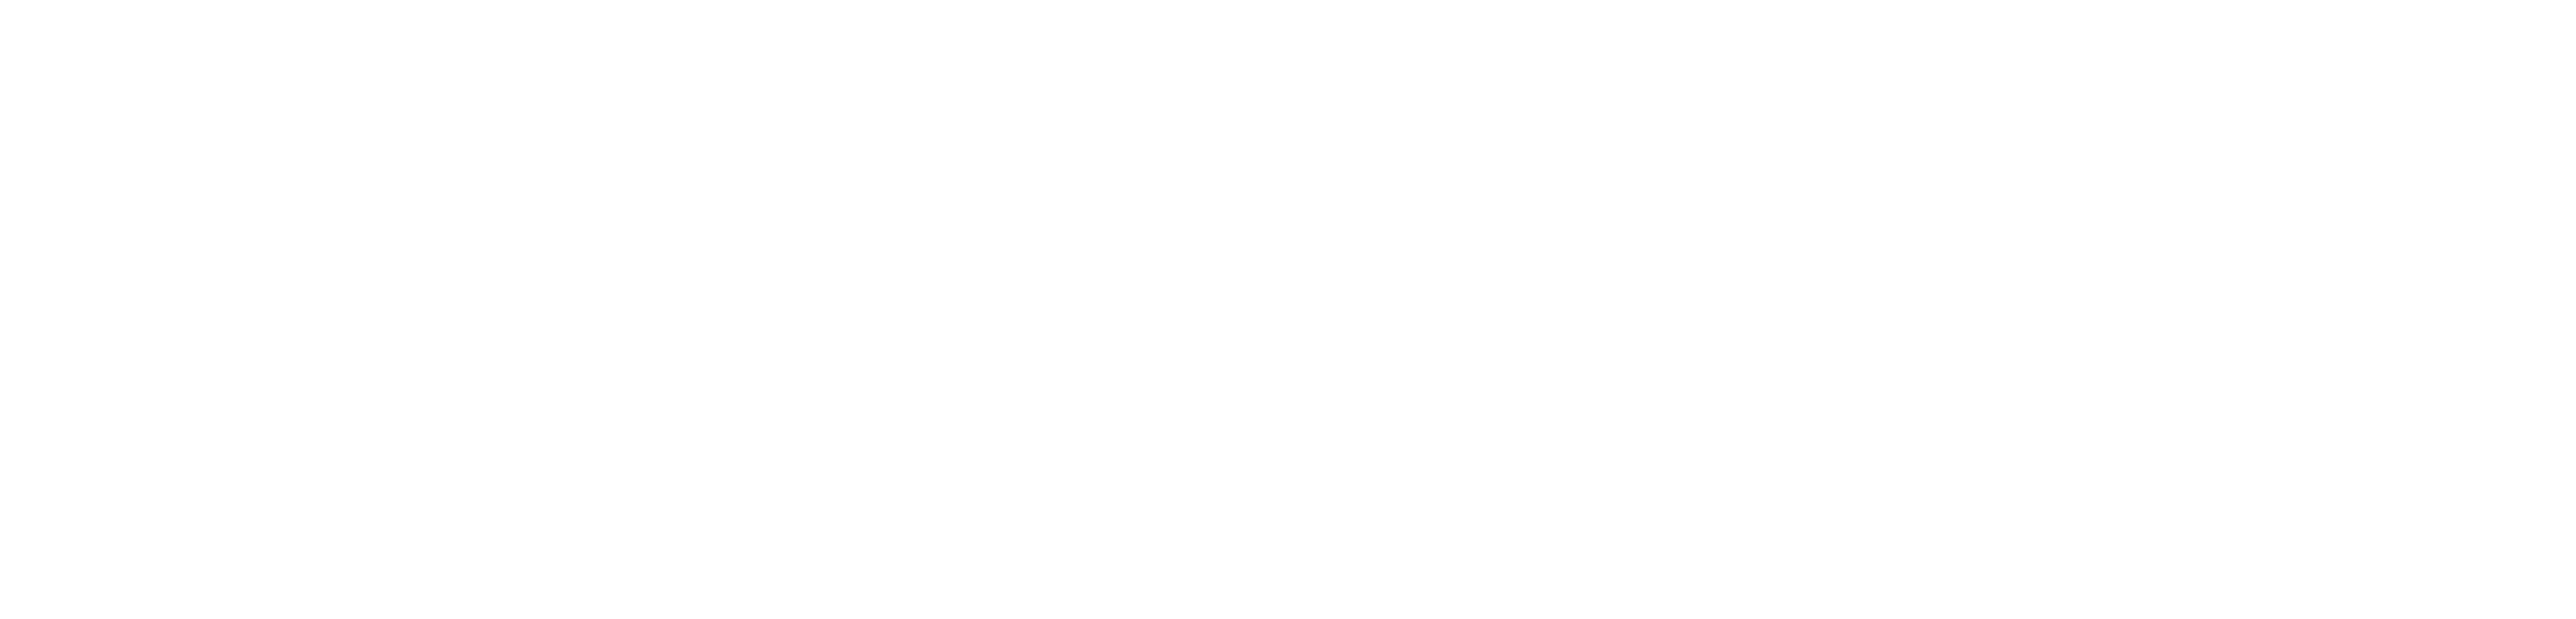 gov travel helpline